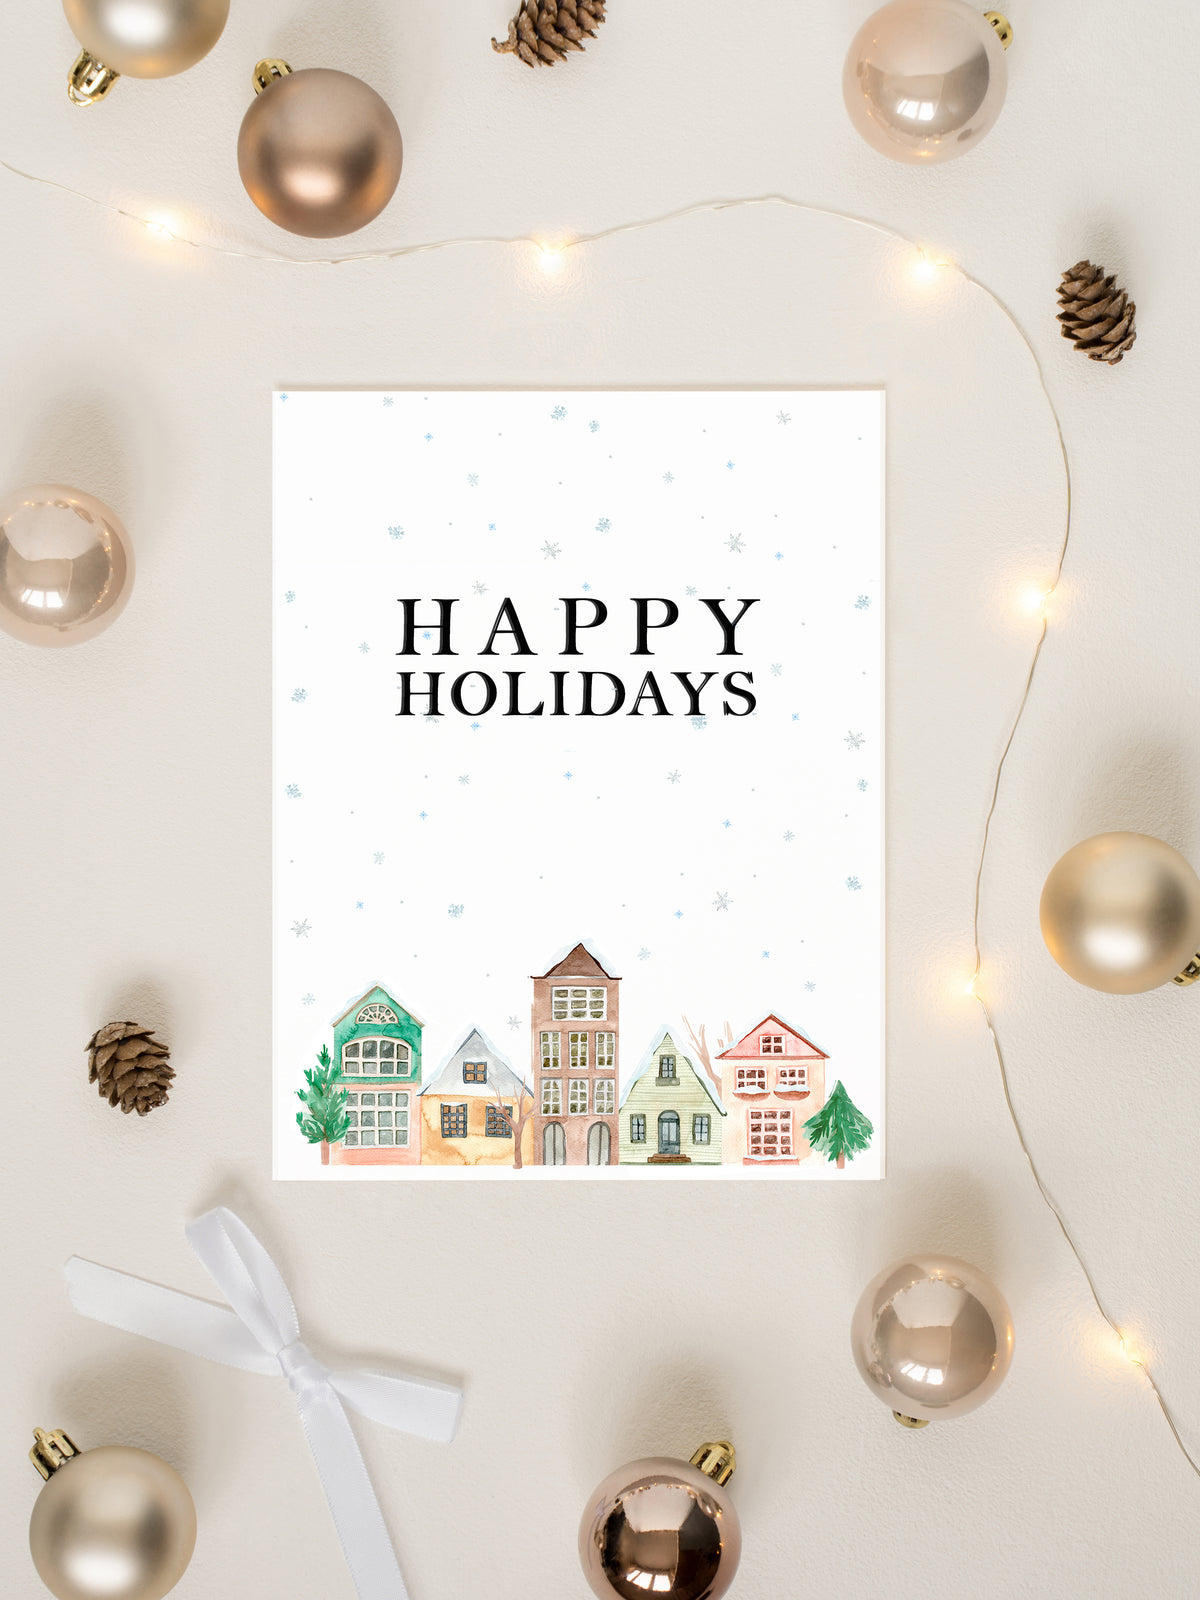 Happy Holidays Card Set,Holiday Chrismas Cards,Handmade Holiday Greeting Cards,Holiday Season Greetings Card,Made in USA